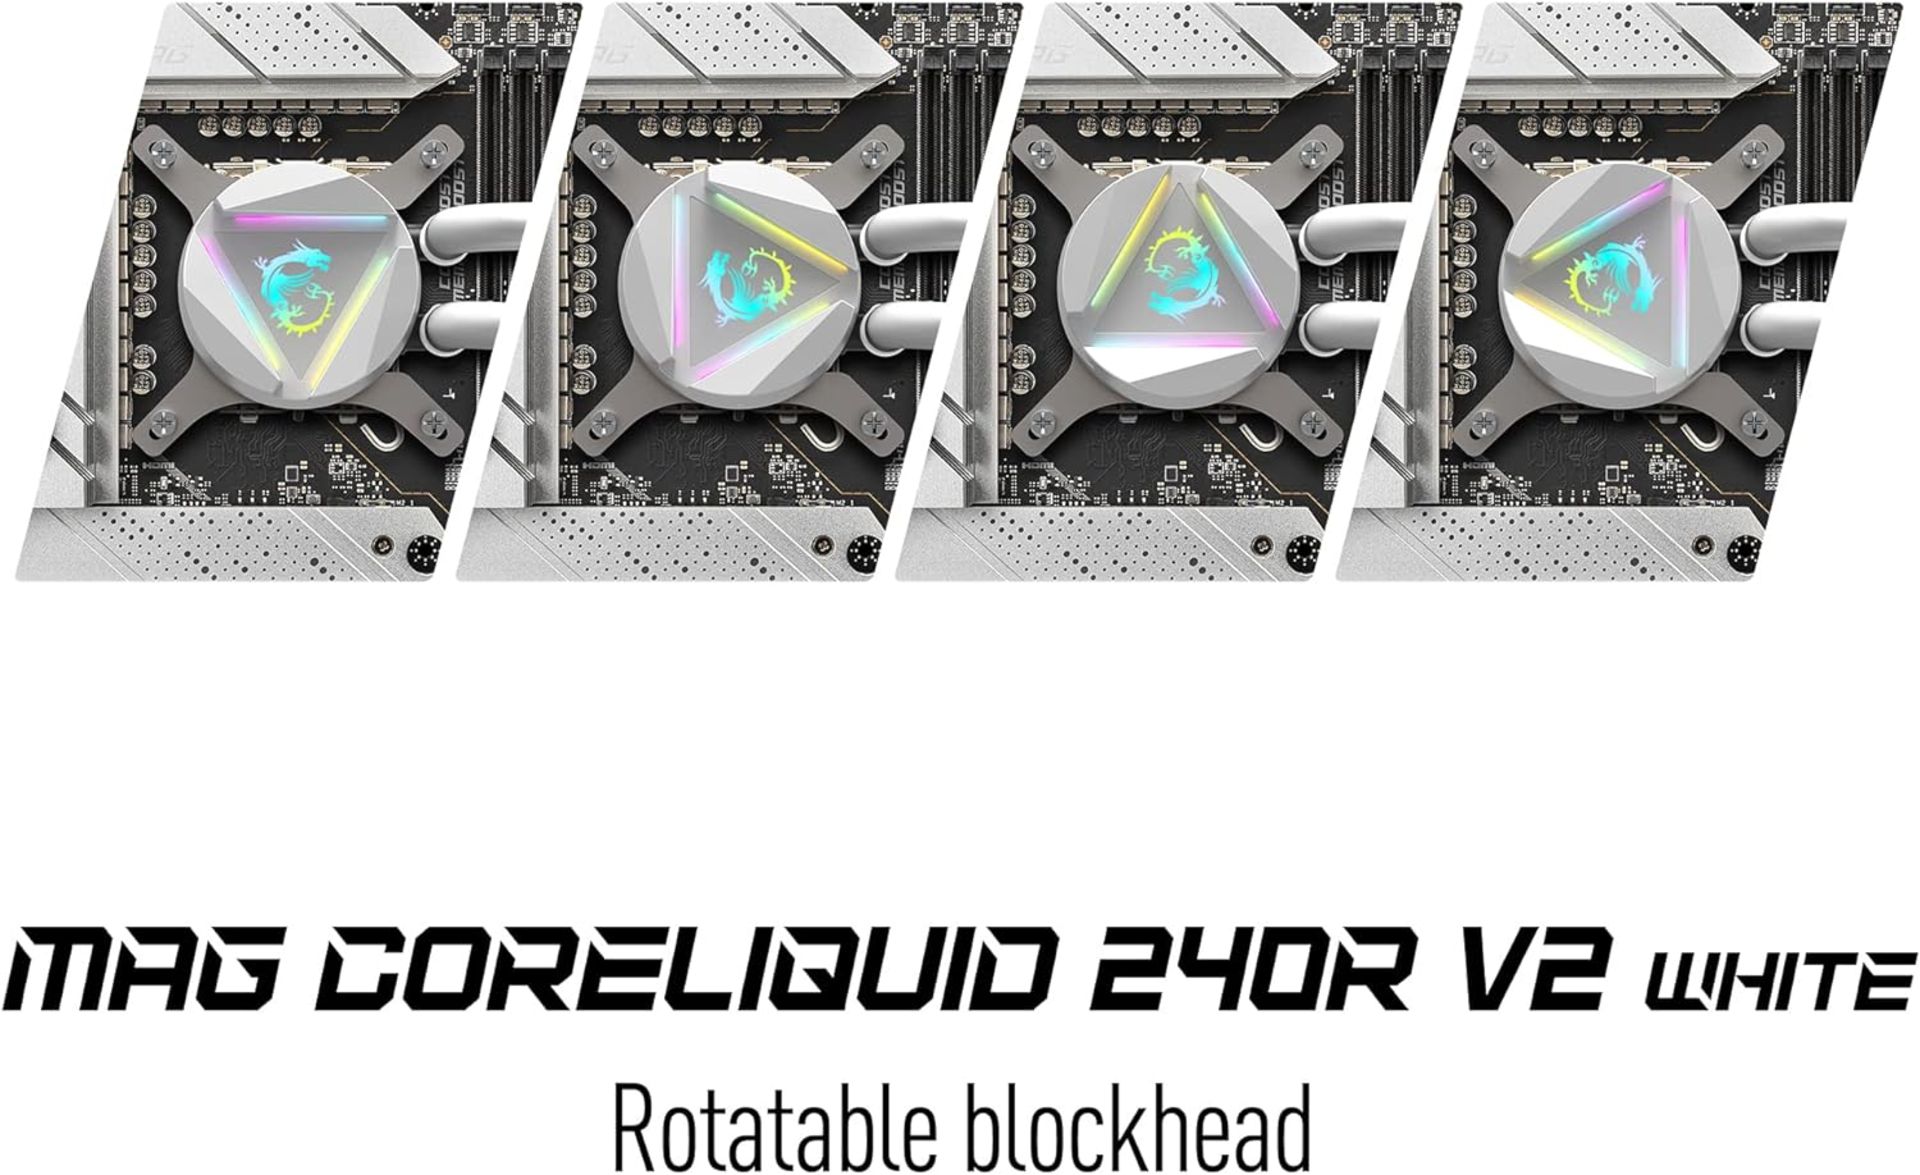 2x BRAND NEW FACTORY SEALED MSI MAG Coreliquid 240R V2 White 240MM AIO Liquid CPU Cooler. RRP £87.98 - Image 2 of 7